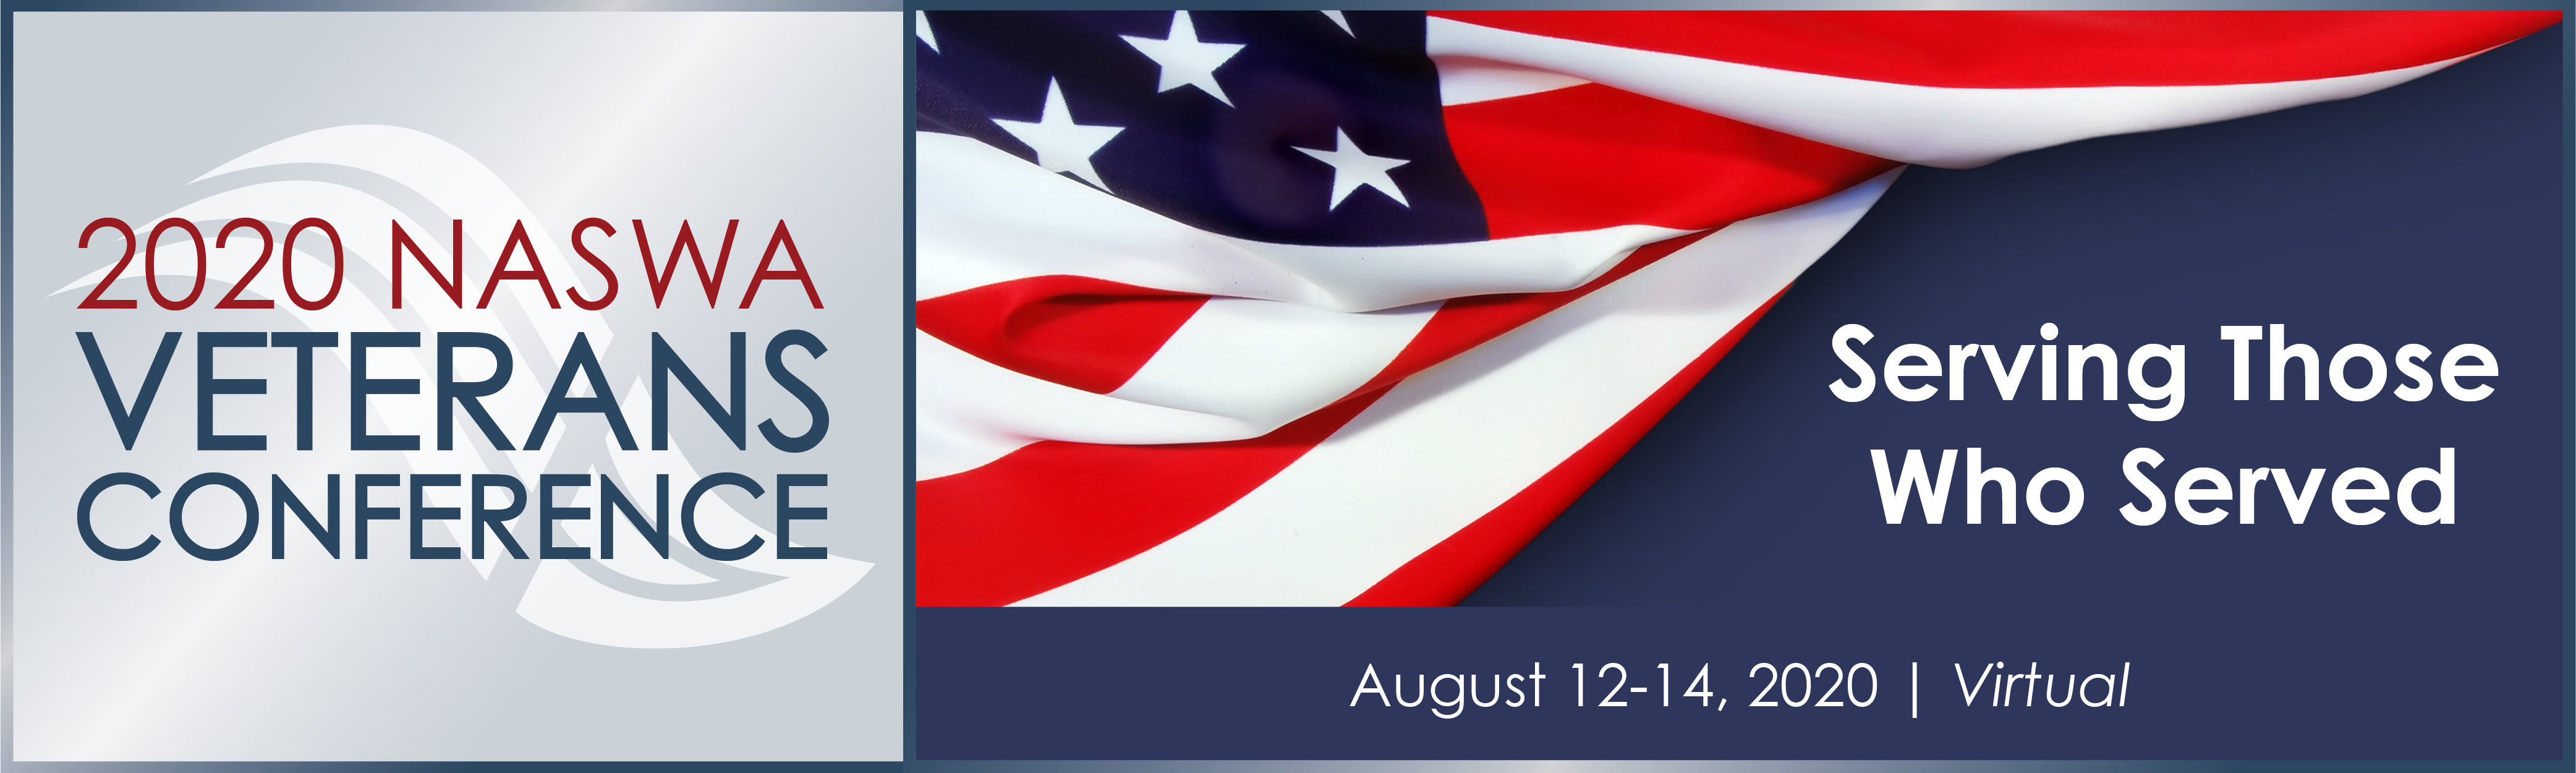 2020 NASWA Veterans Conference - Virtual Event